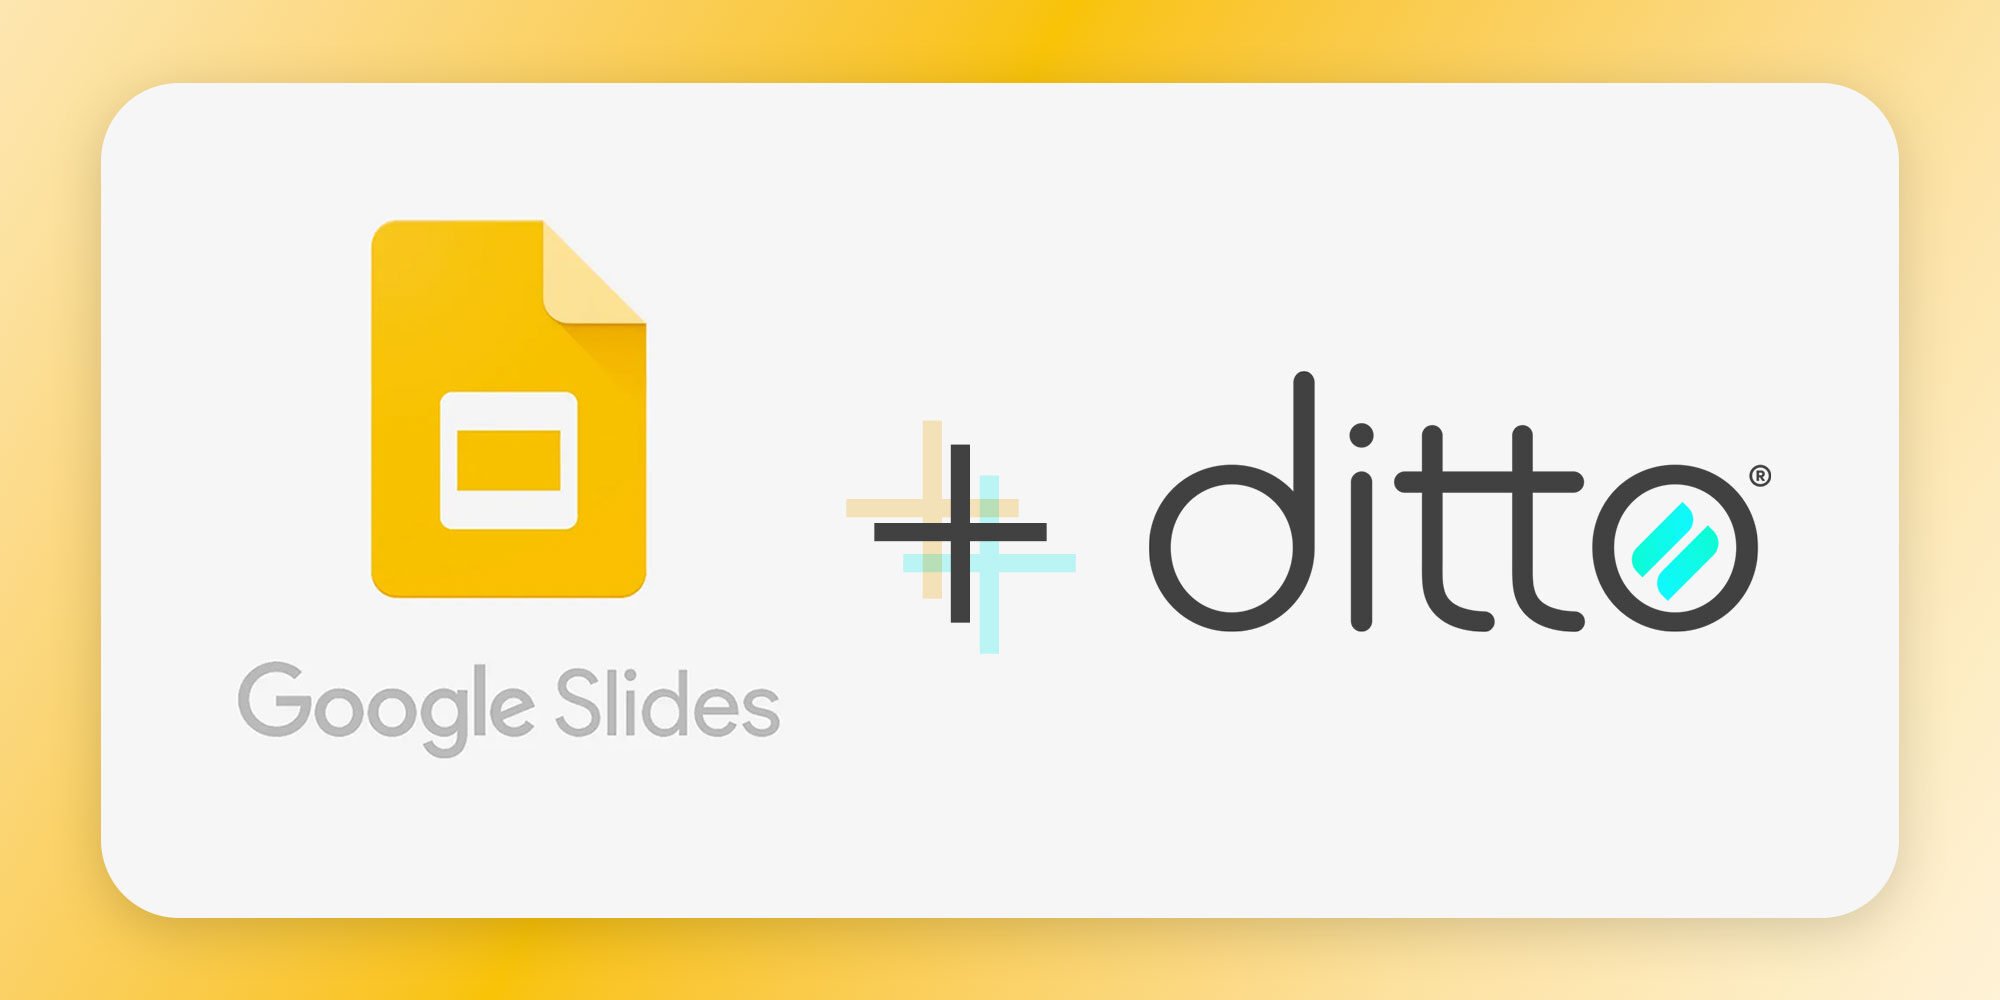 Google Slides and Ditto logos